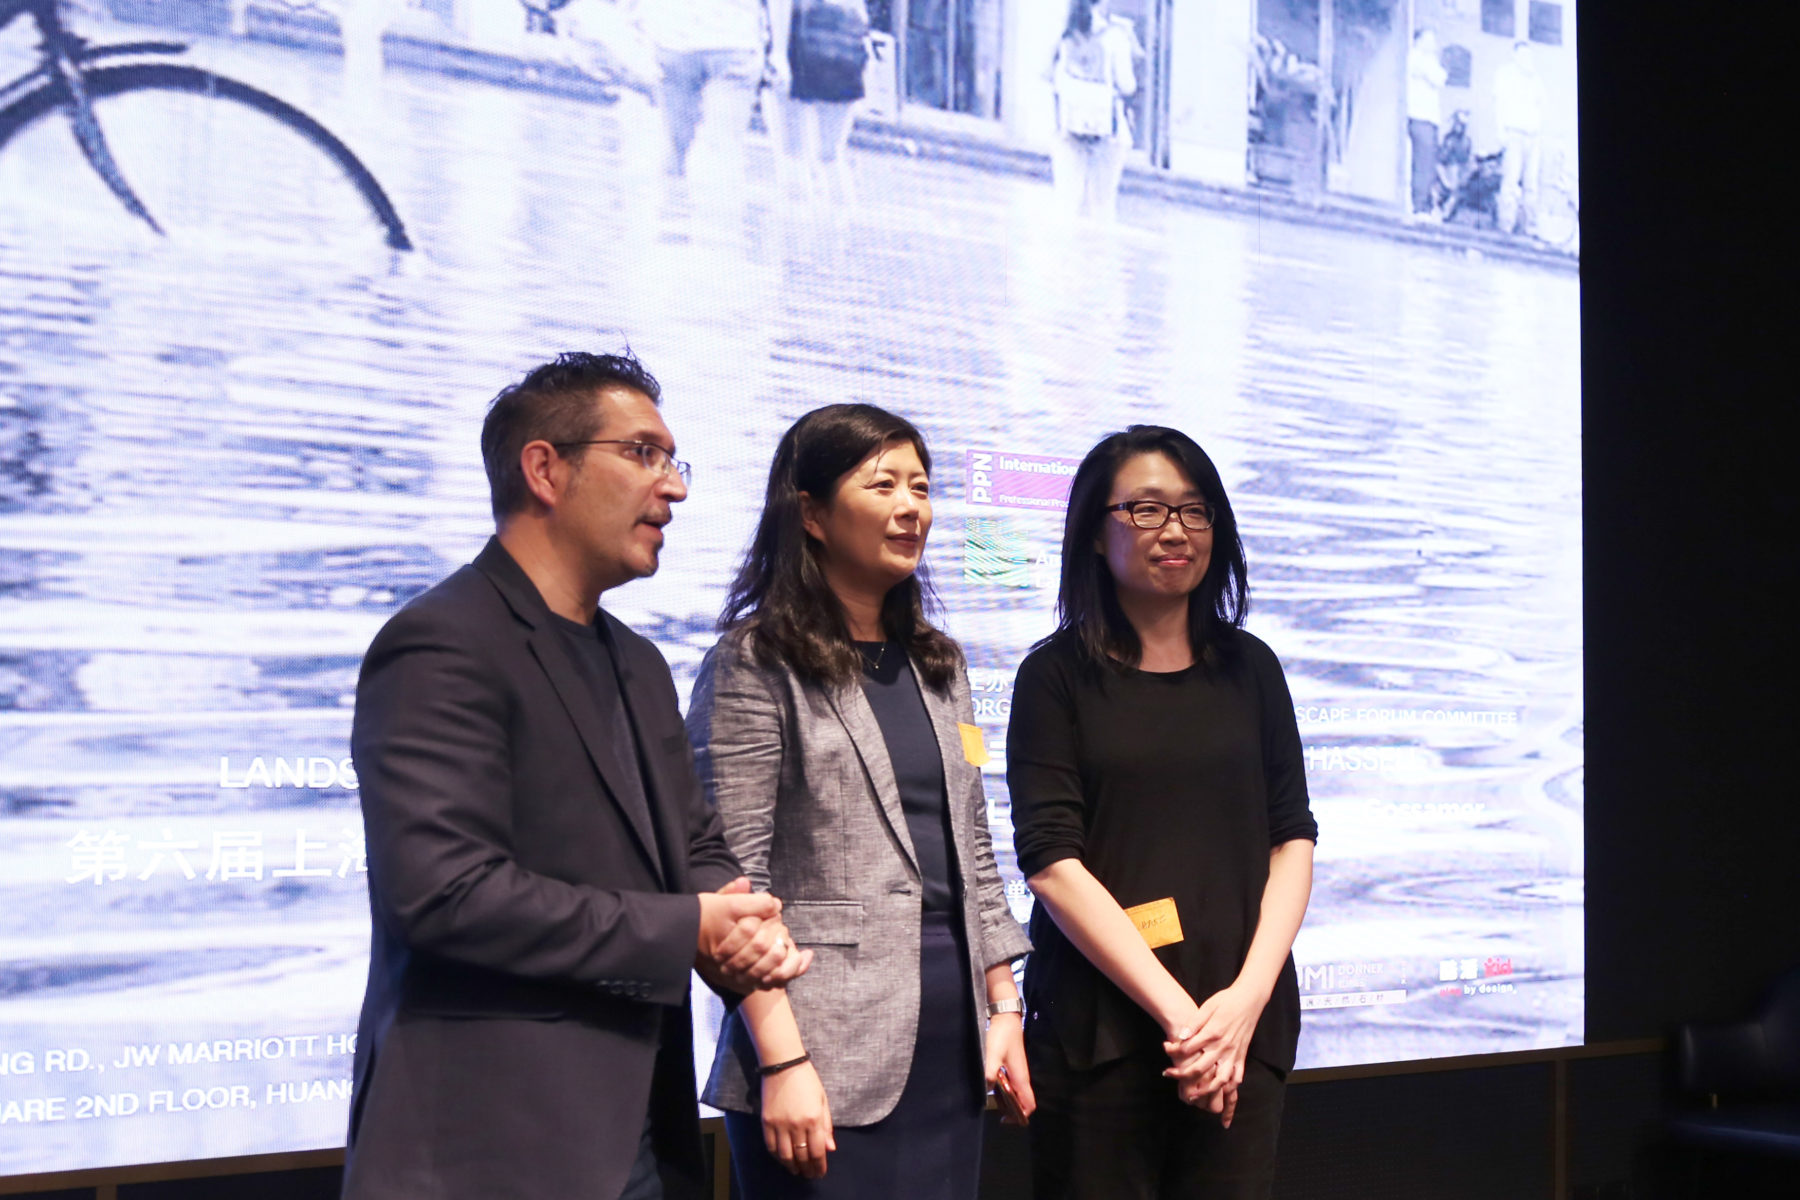 Sasaki Principal Dou Zhang with two other panelists at the event.